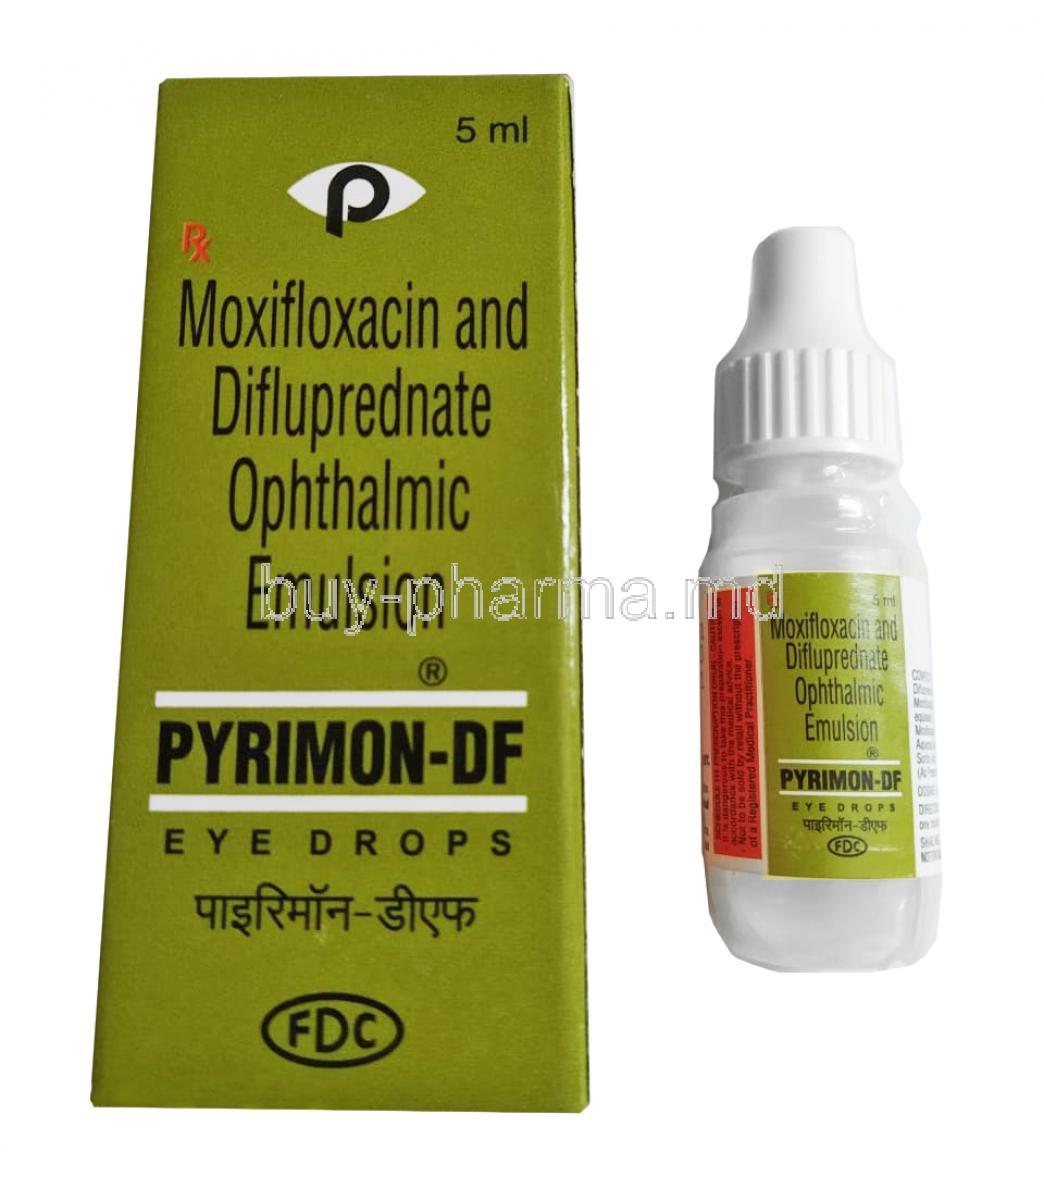 Pyrimon-DF Eye drop, Moxifloxacin and Difluprednate box and bottle